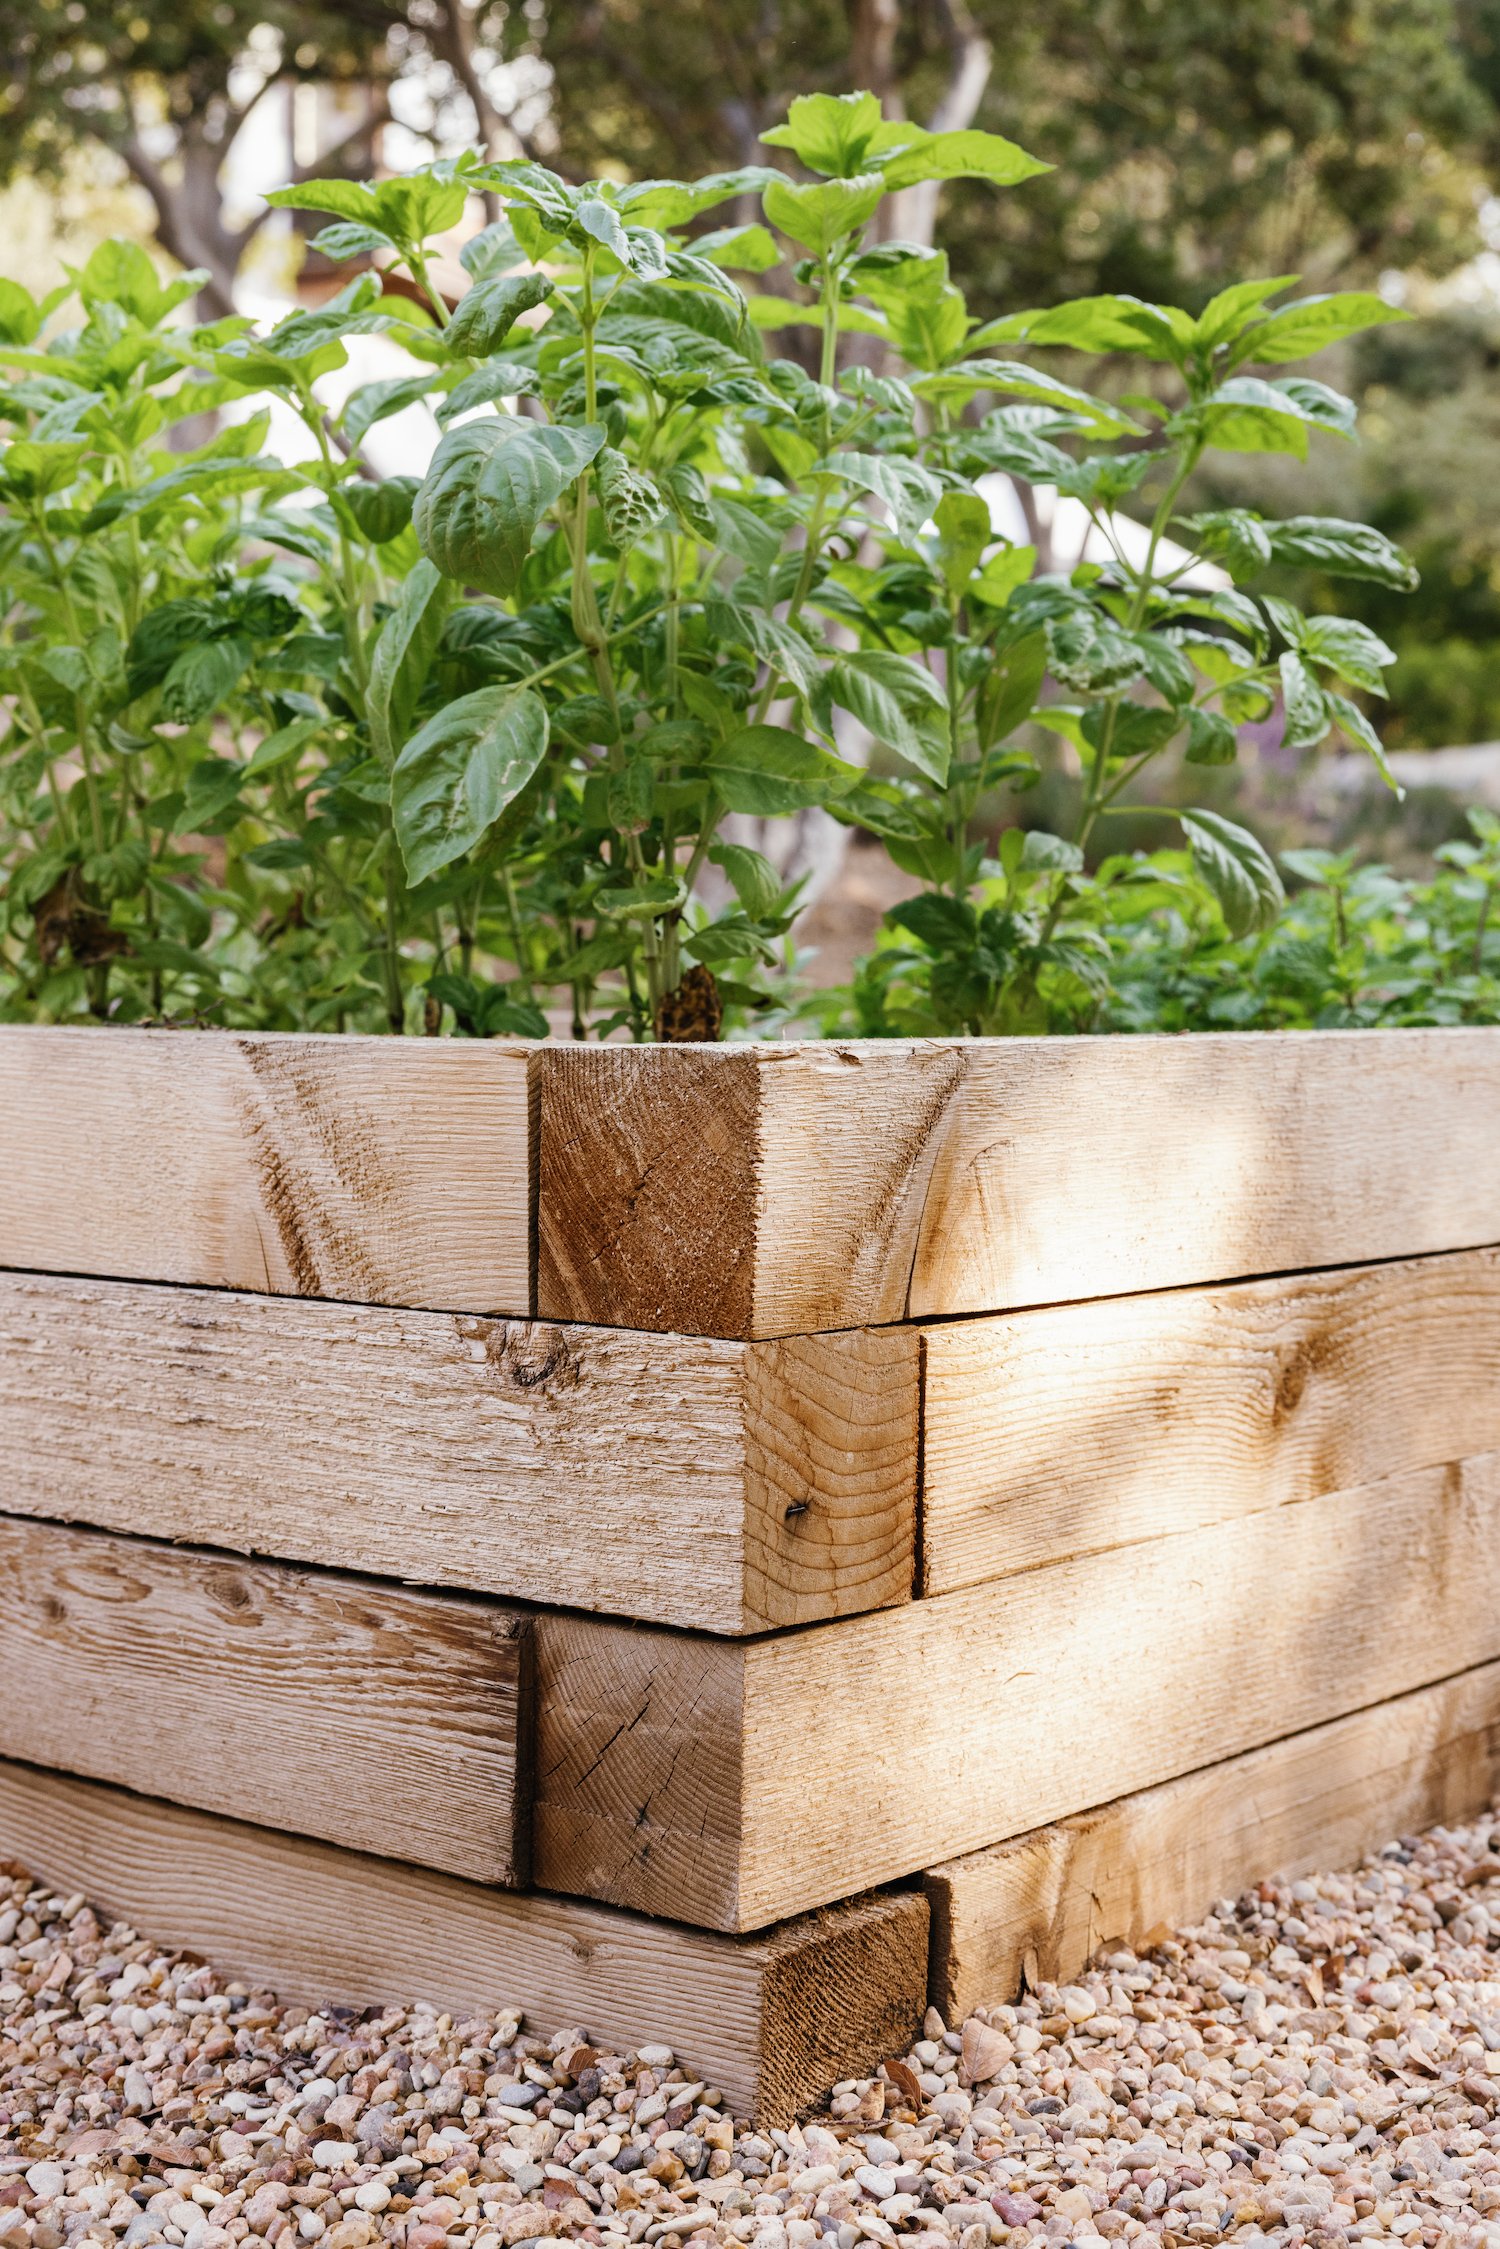 camille styles backyard - how to build raised garden beds - vegetable garden DIY cedar planks